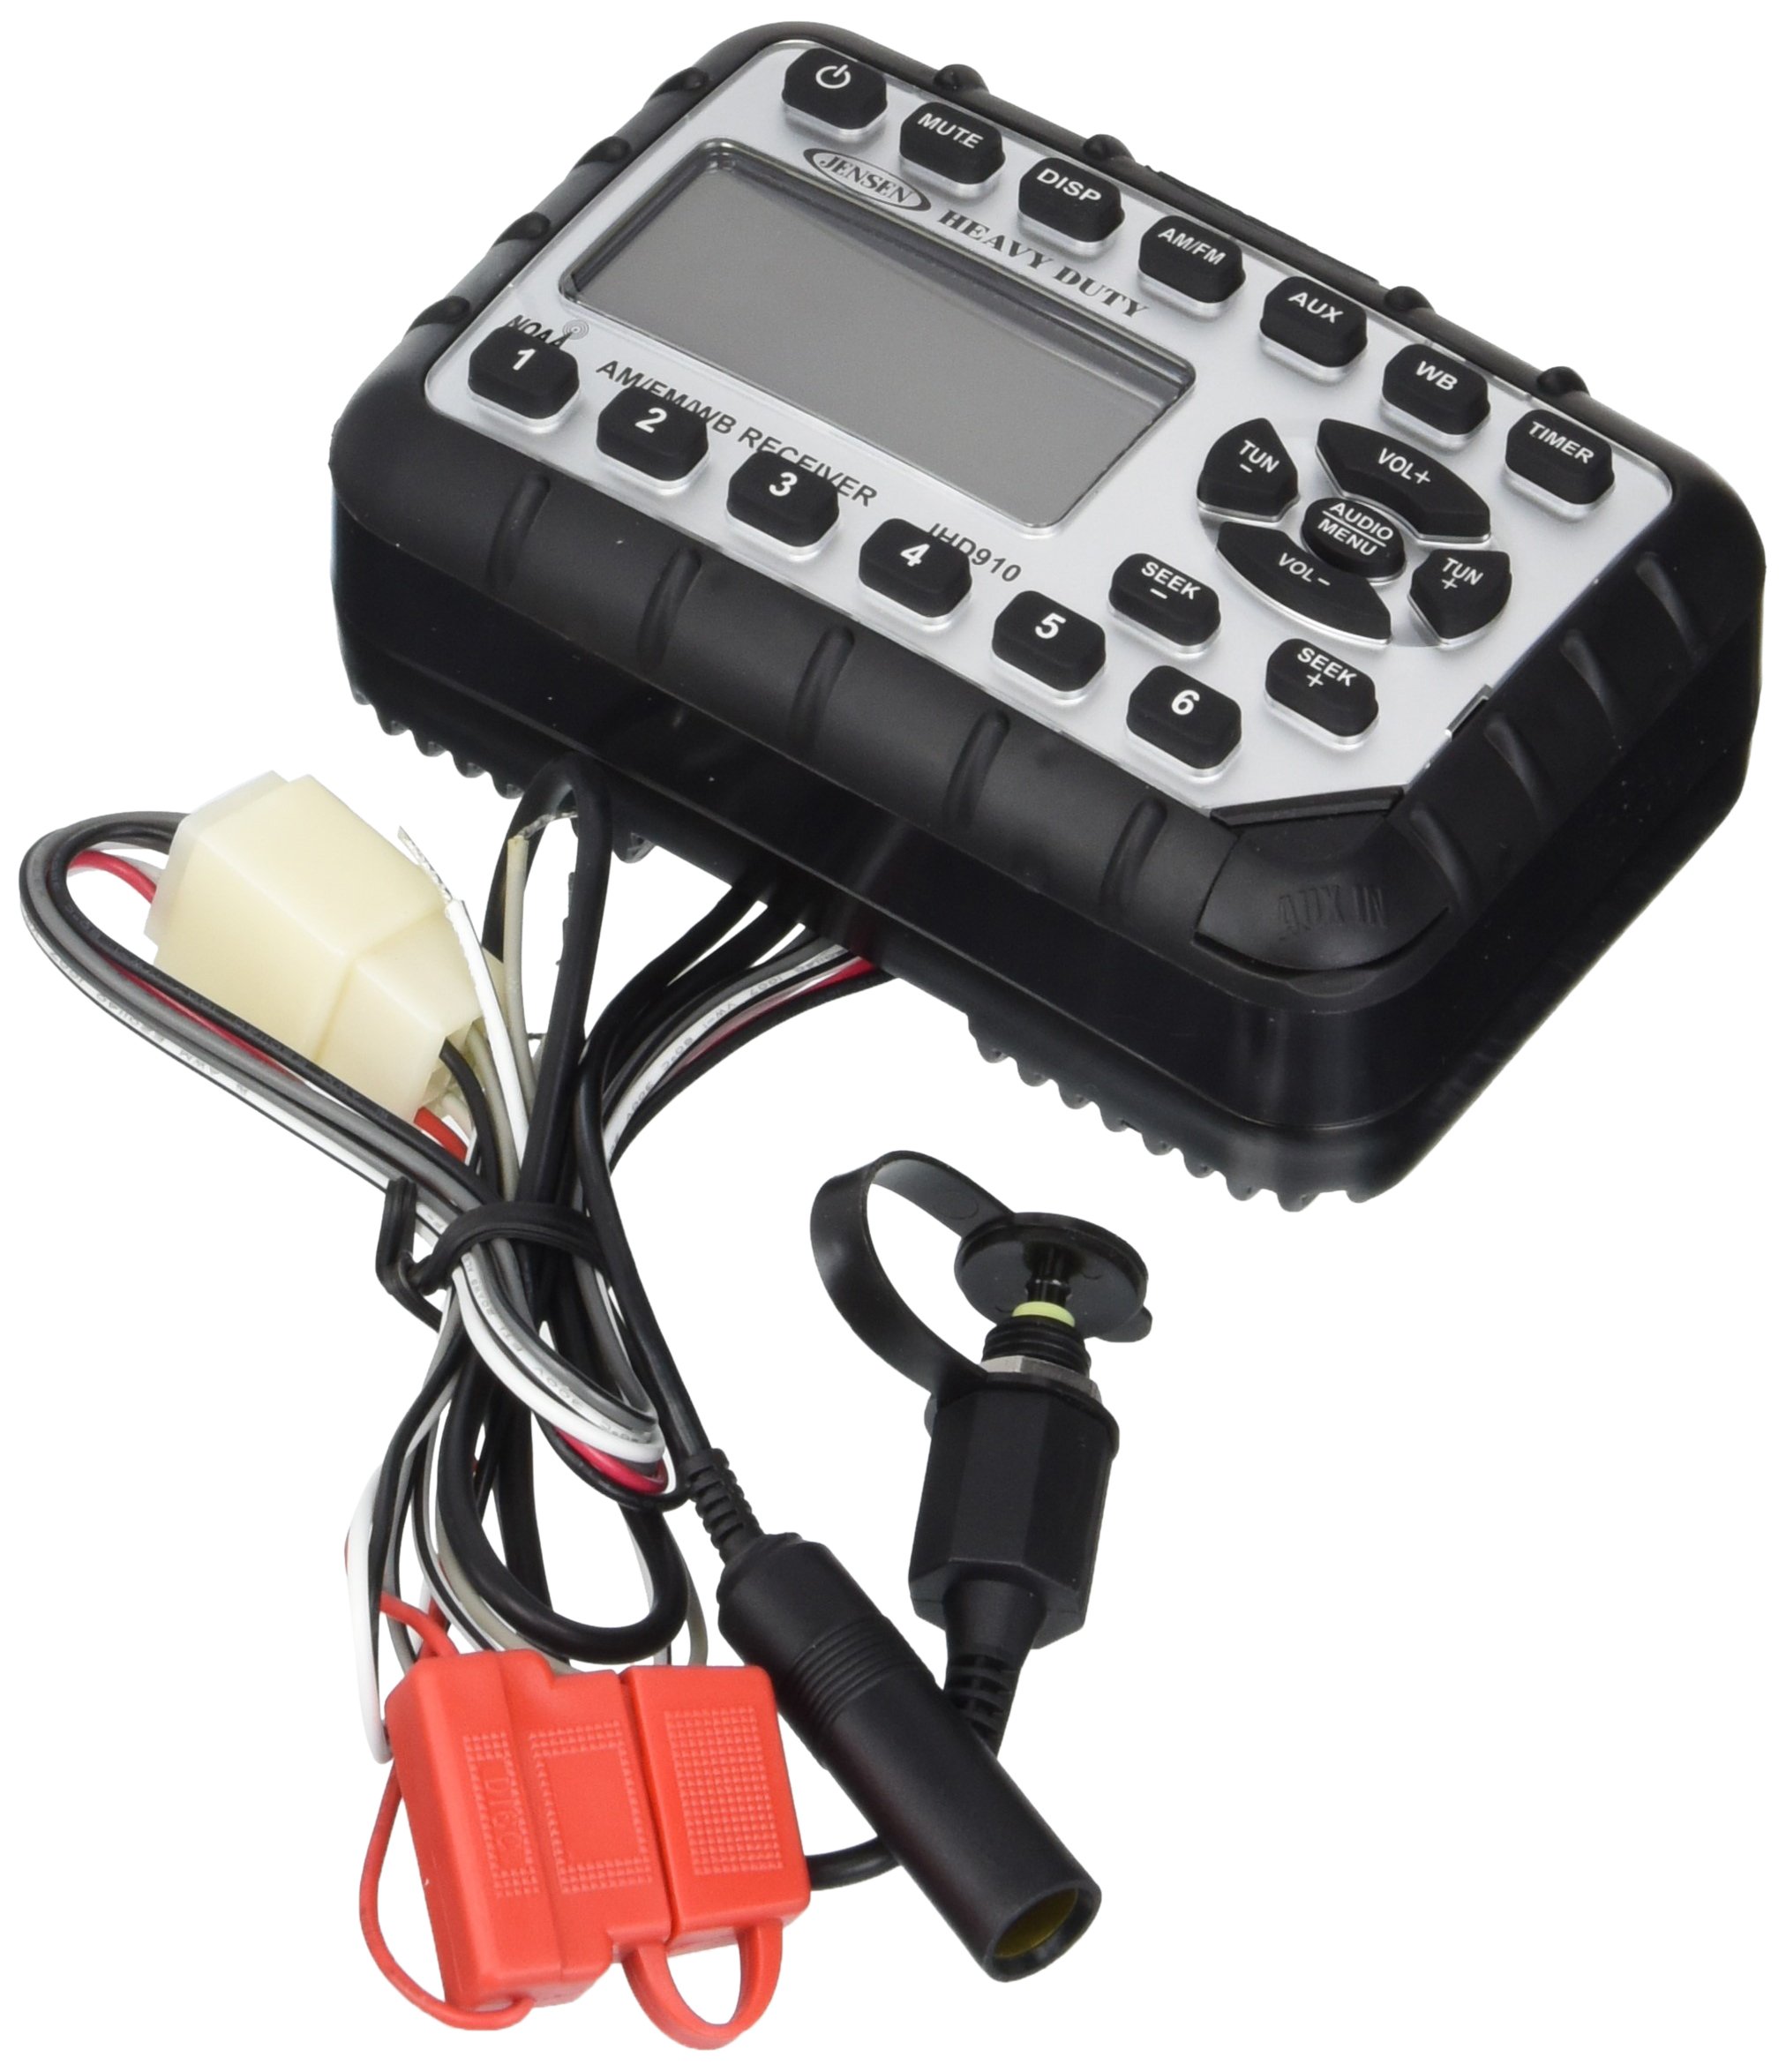 JENSEN JHD910 mini rádio resistente à prova d'água AM/FM/WB